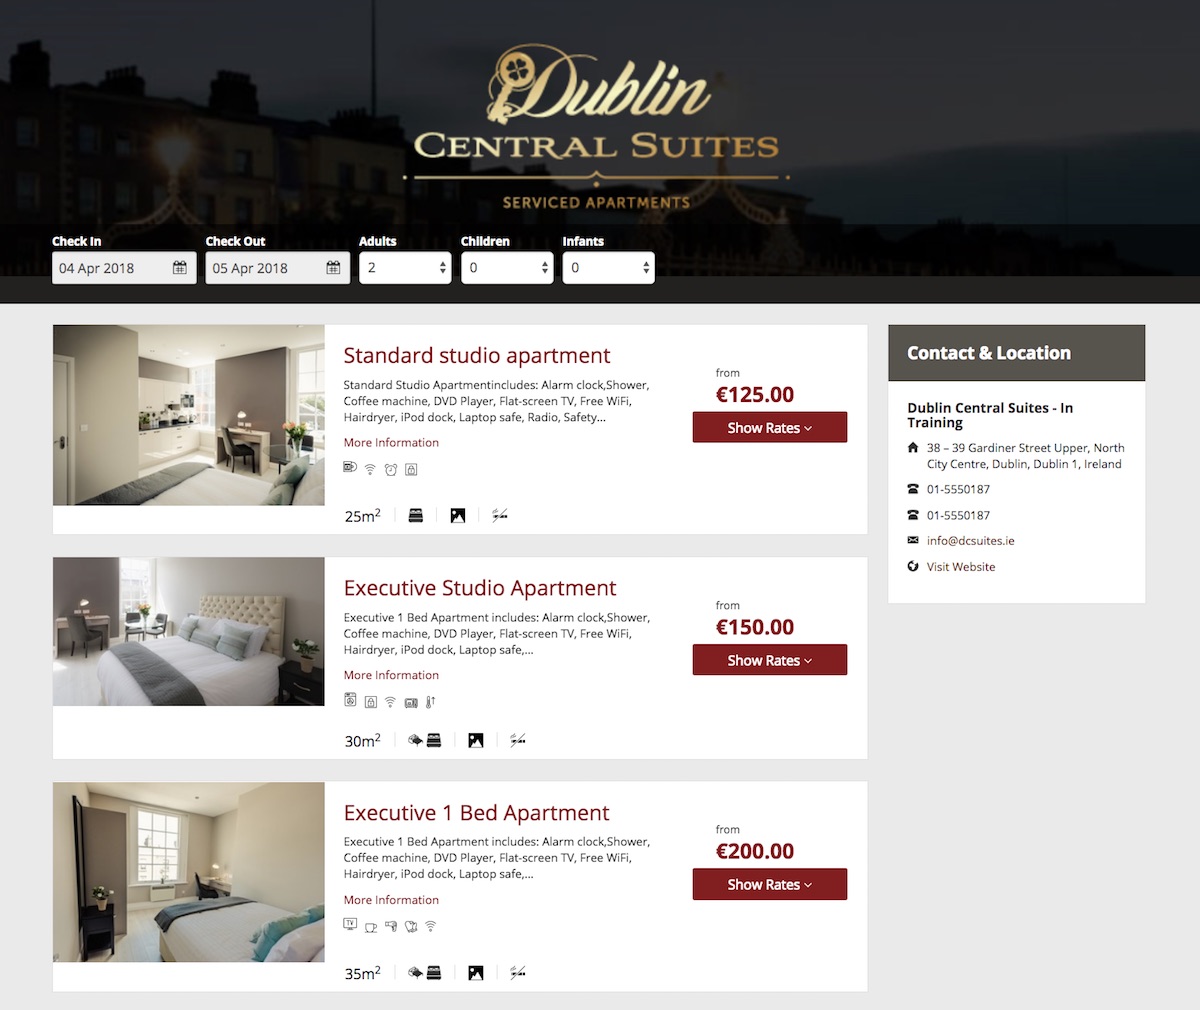 luxury hotel website design